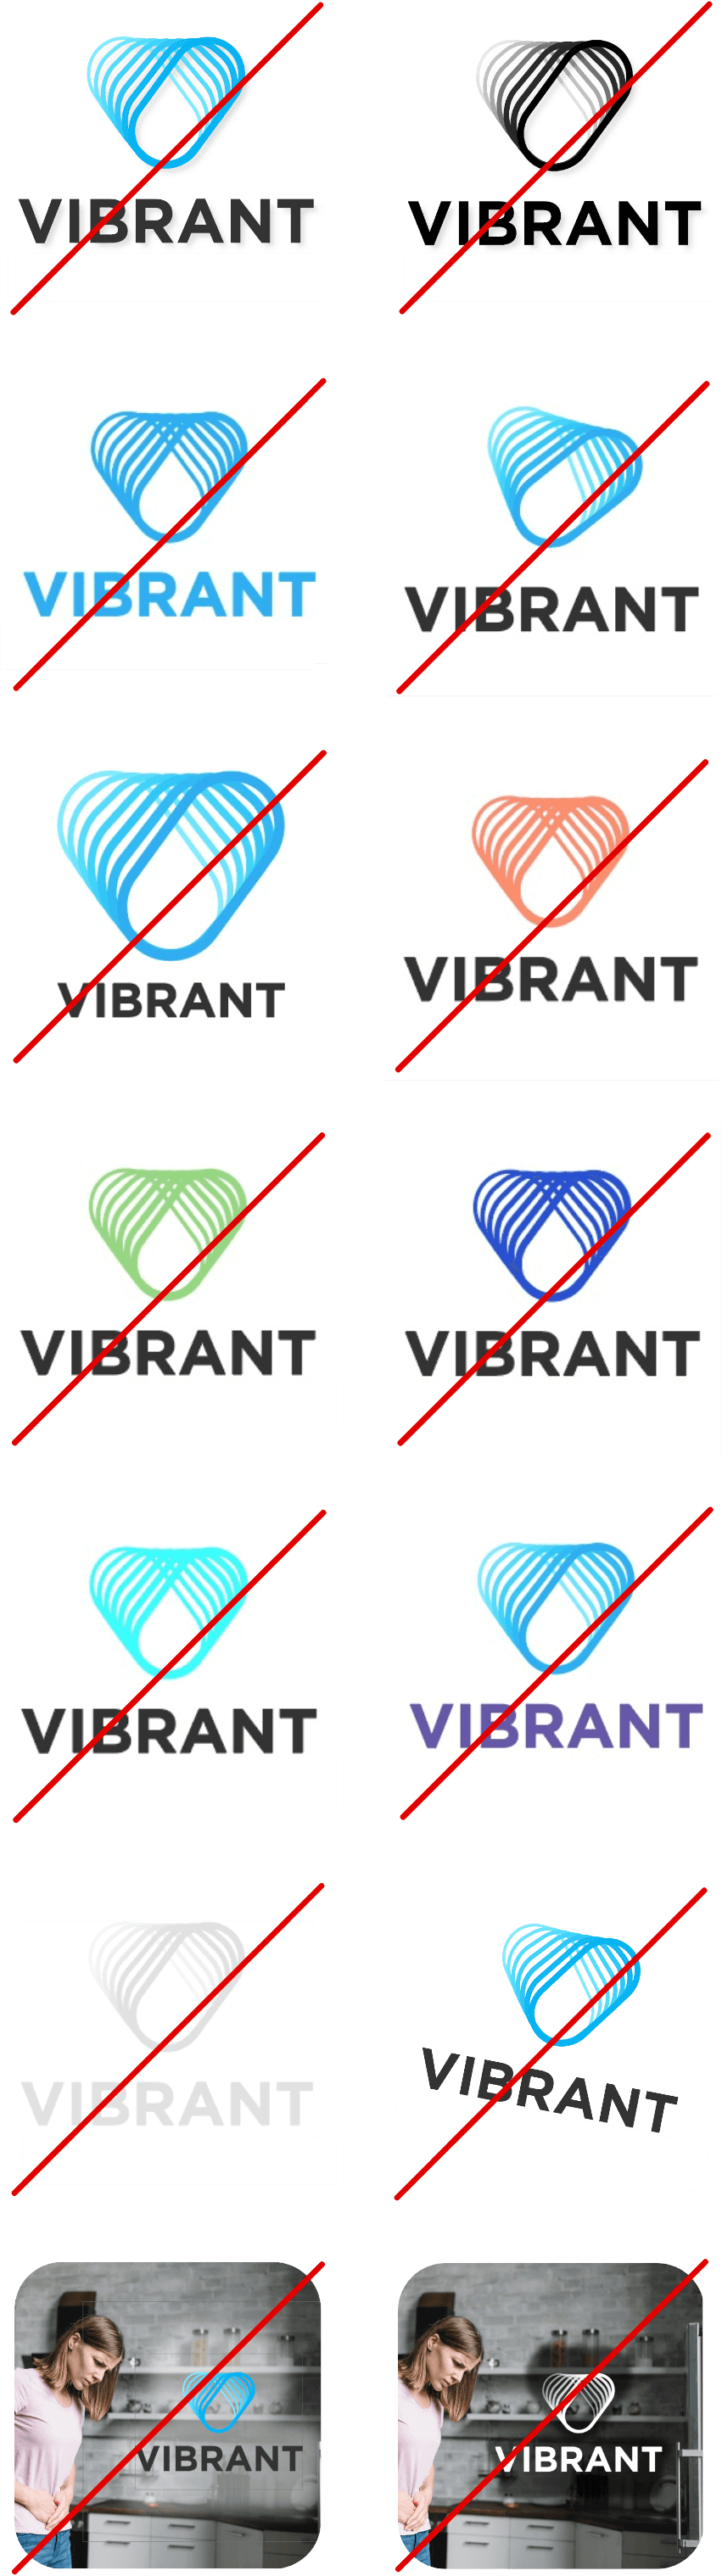 Vibrant Incorrect Logo Usage Mobile-Friendly